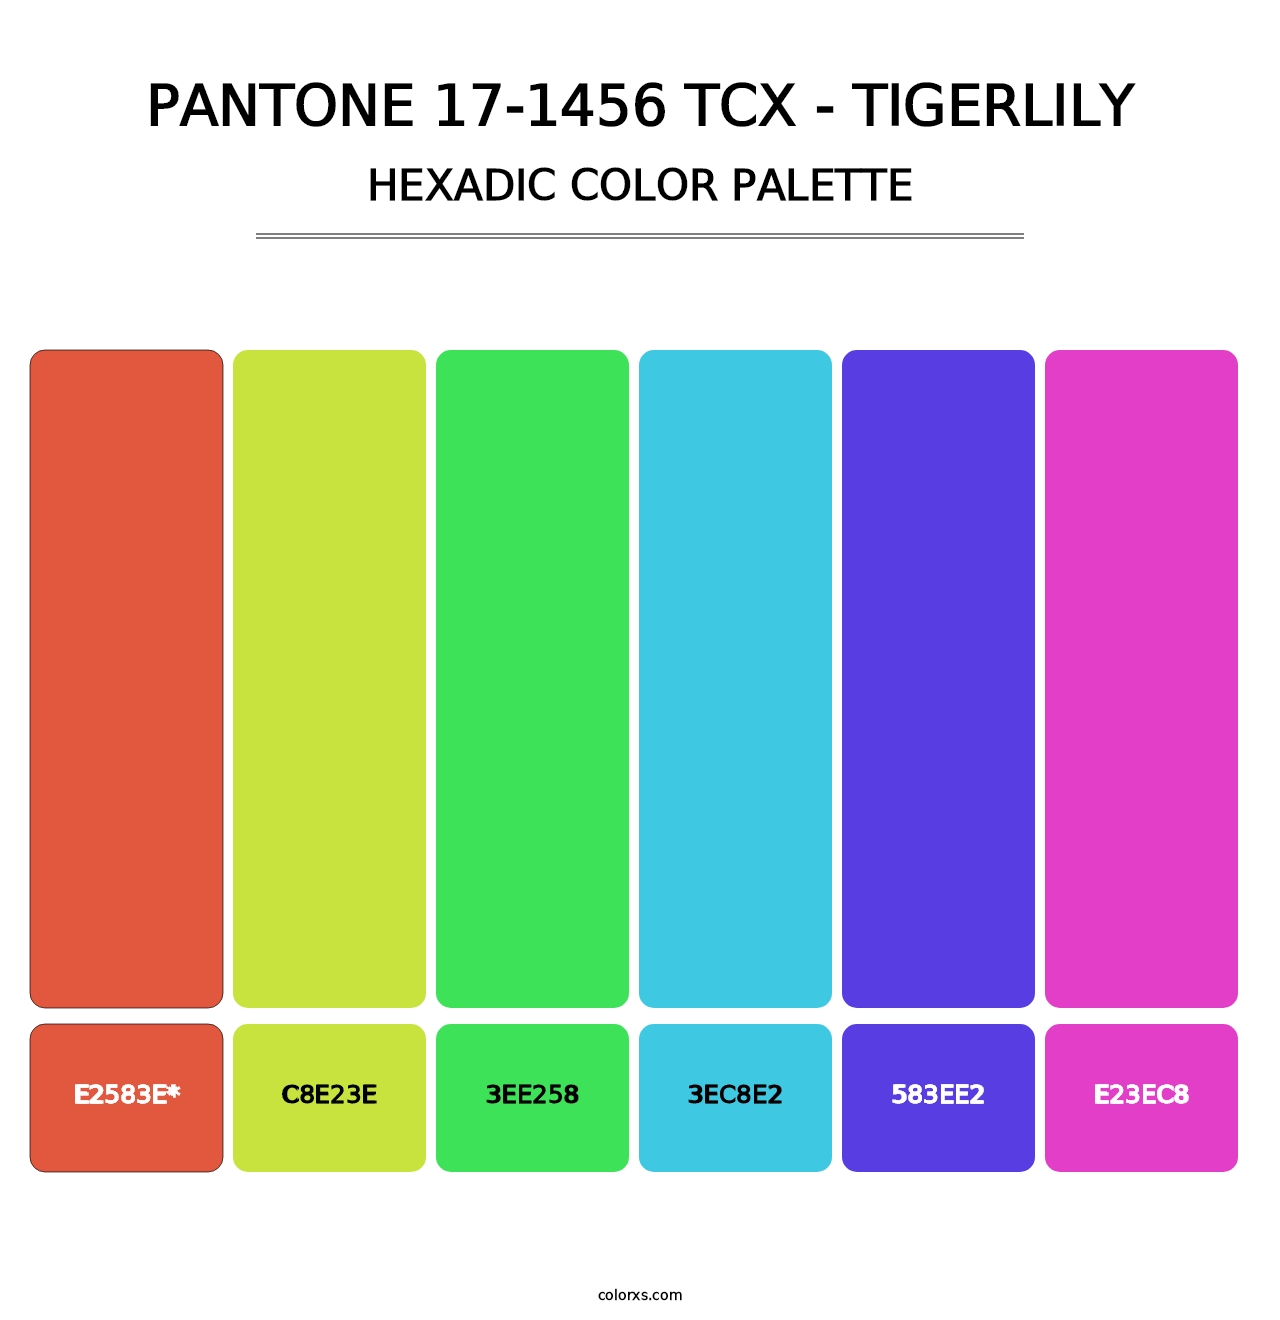 PANTONE 17-1456 TCX - Tigerlily - Hexadic Color Palette